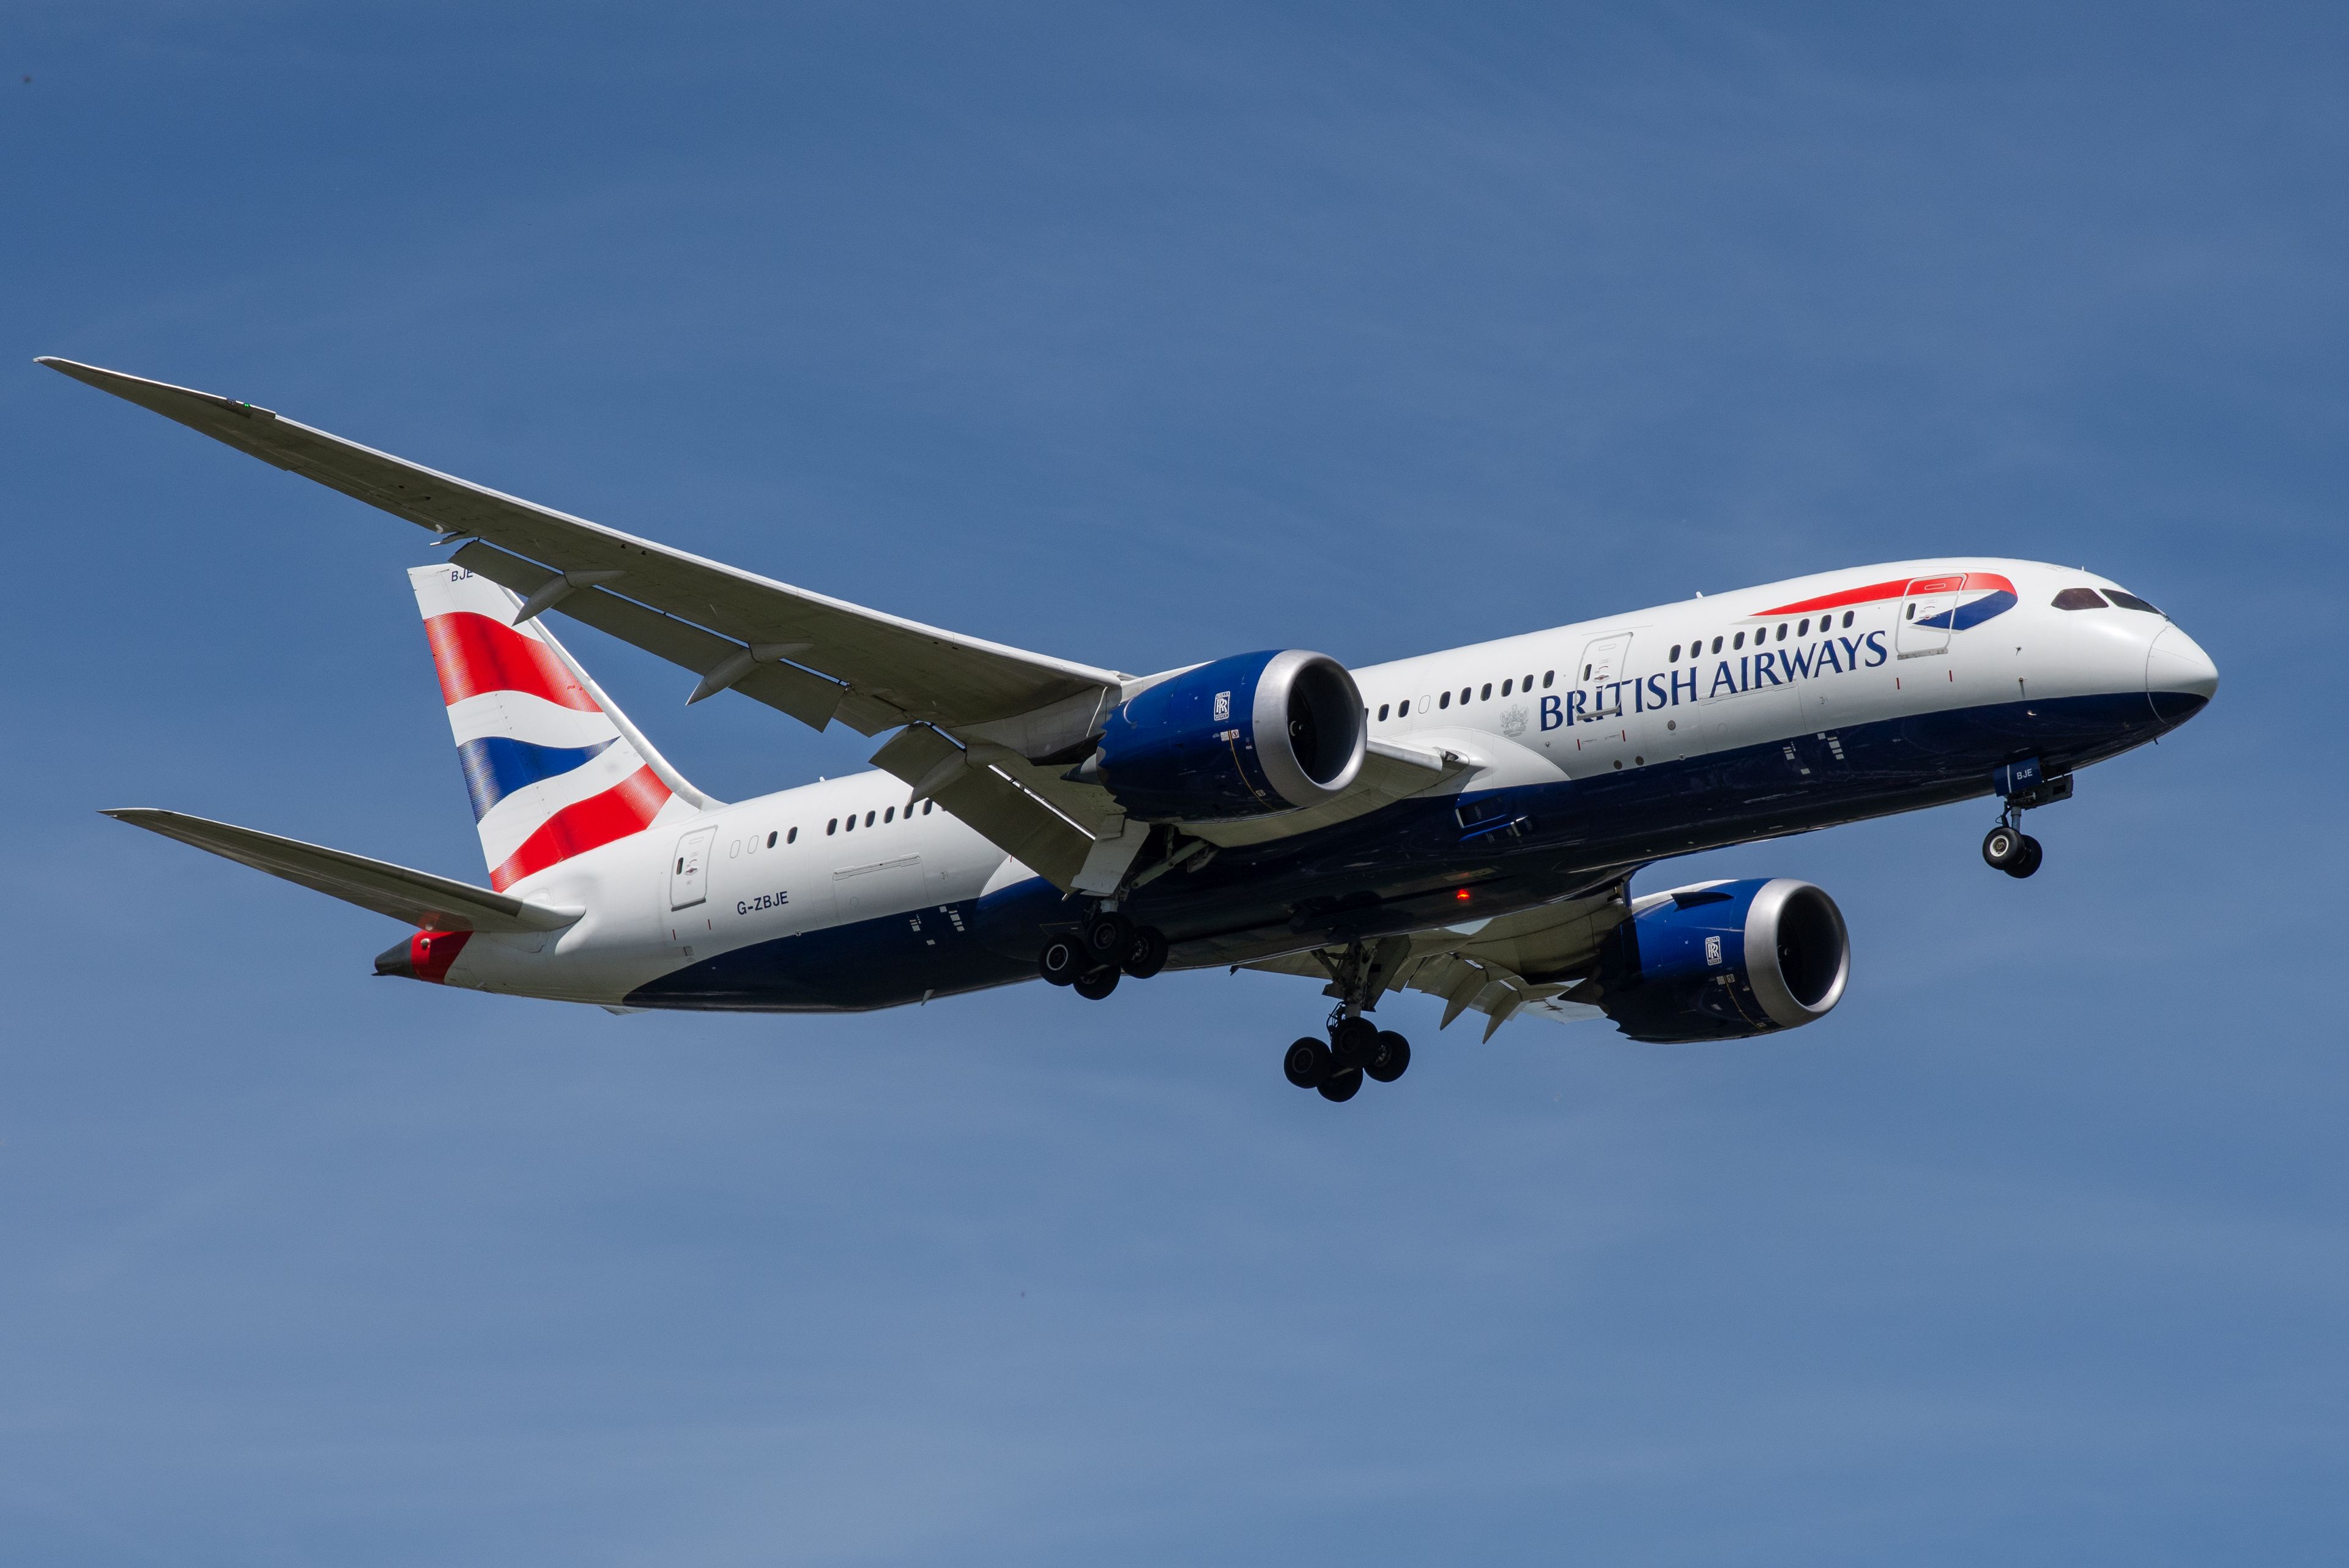 G-ZBJE/GZBJE British Airways Boeing 787 Airframe Information - AVSpotters.com